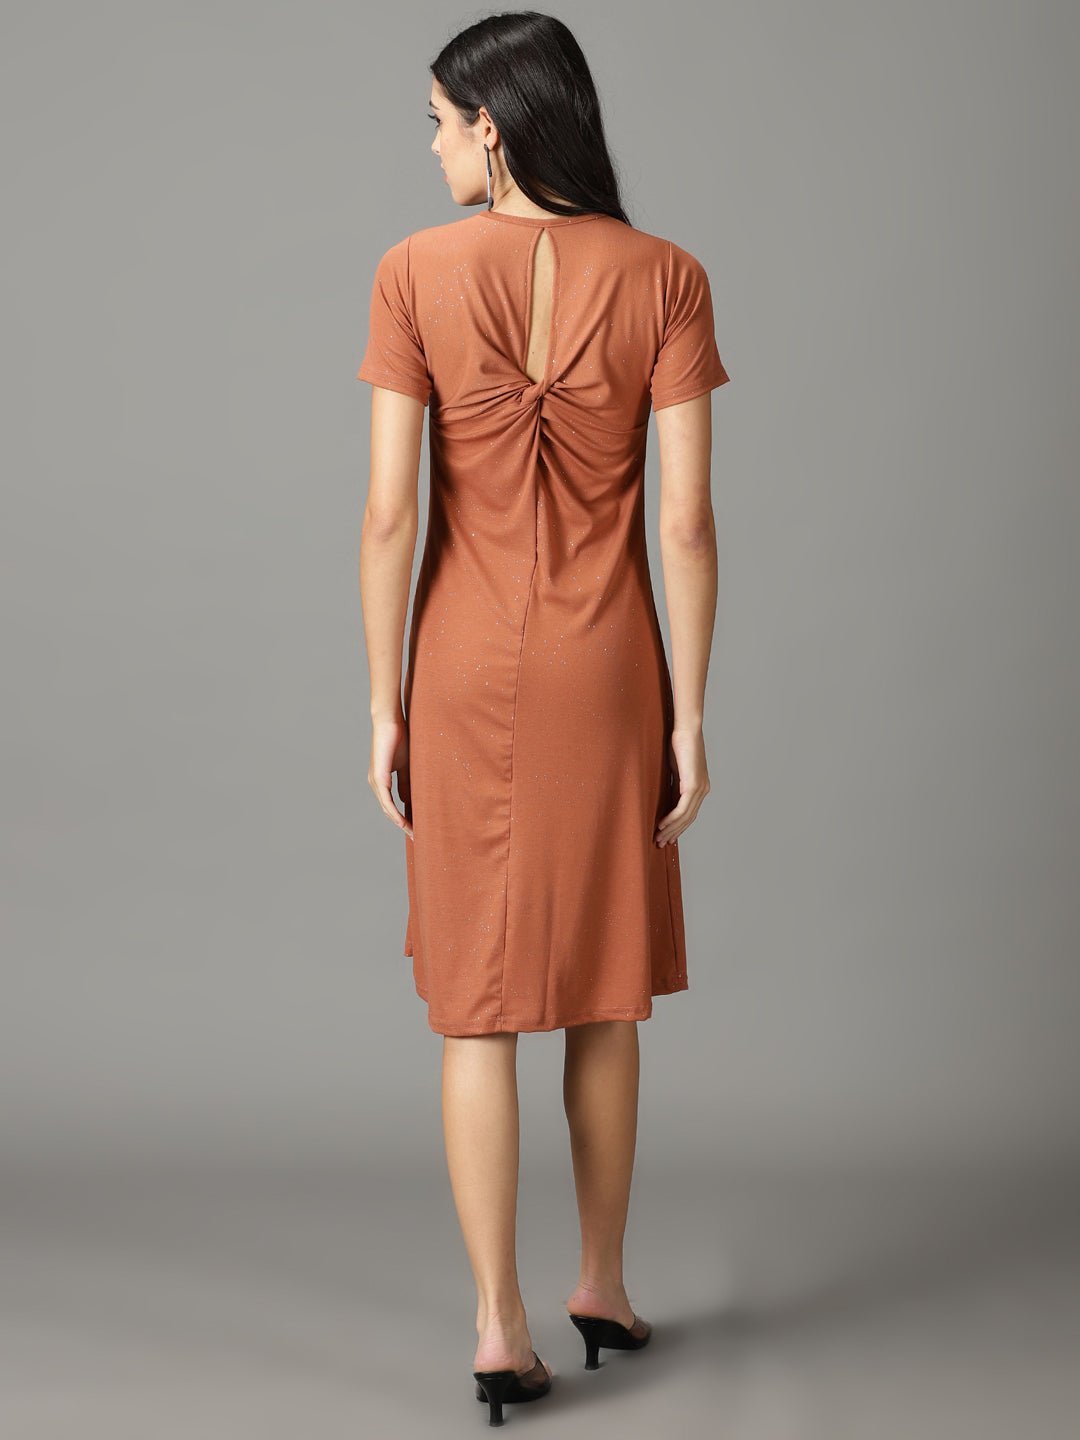 Women's Rust Embellished A-Line Dress